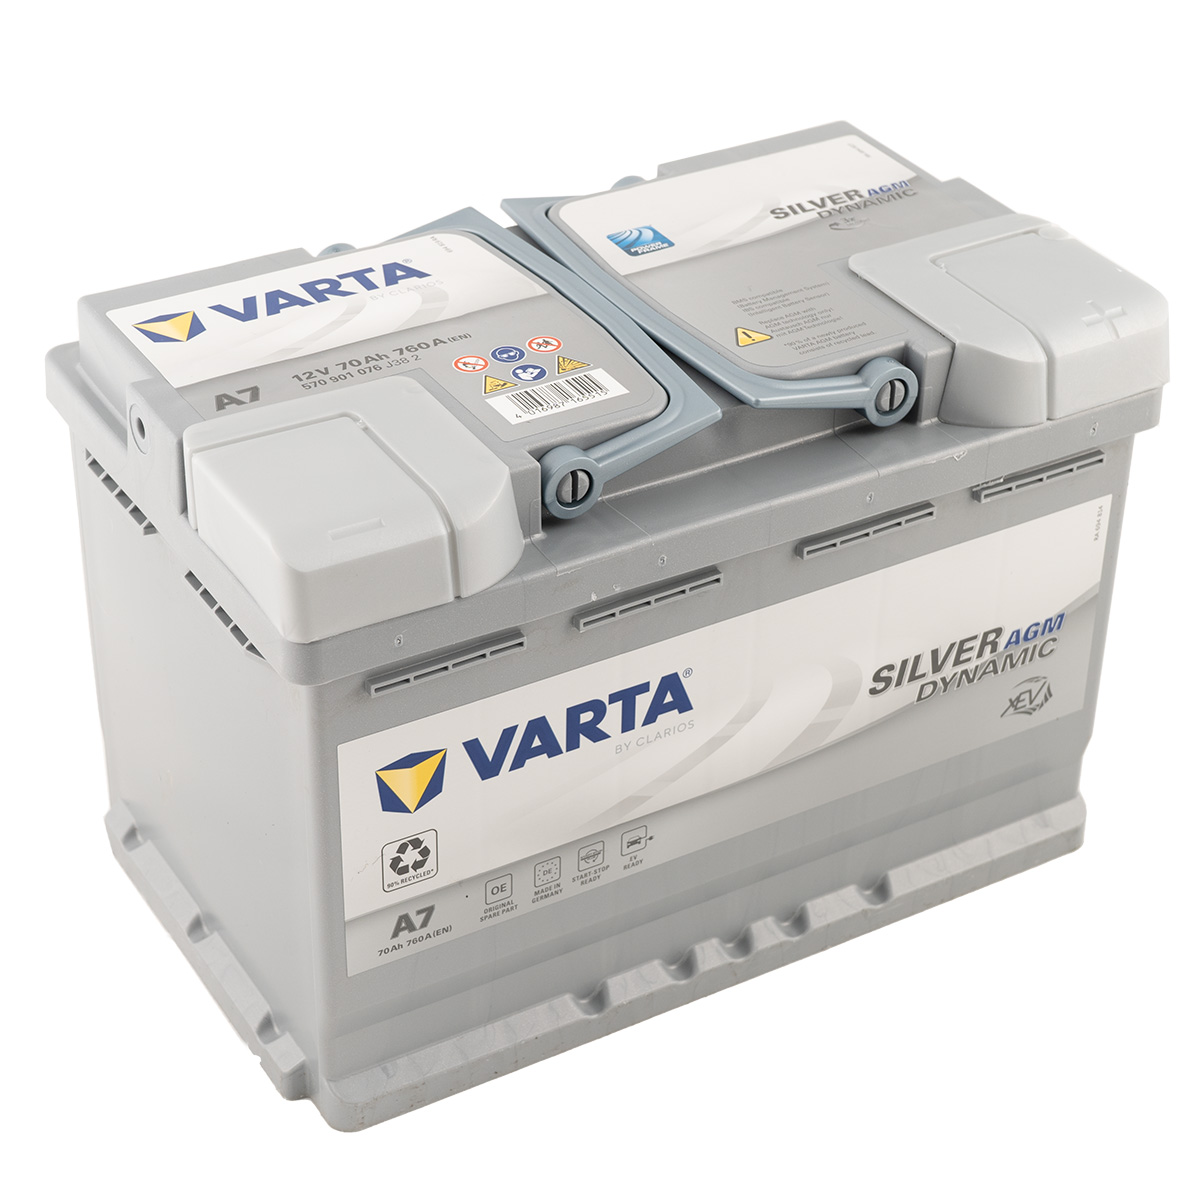 Varta E39 AGM Stop Start Car Battery (570 901 076) (096) 12V 70Ah - Heavy  Duty